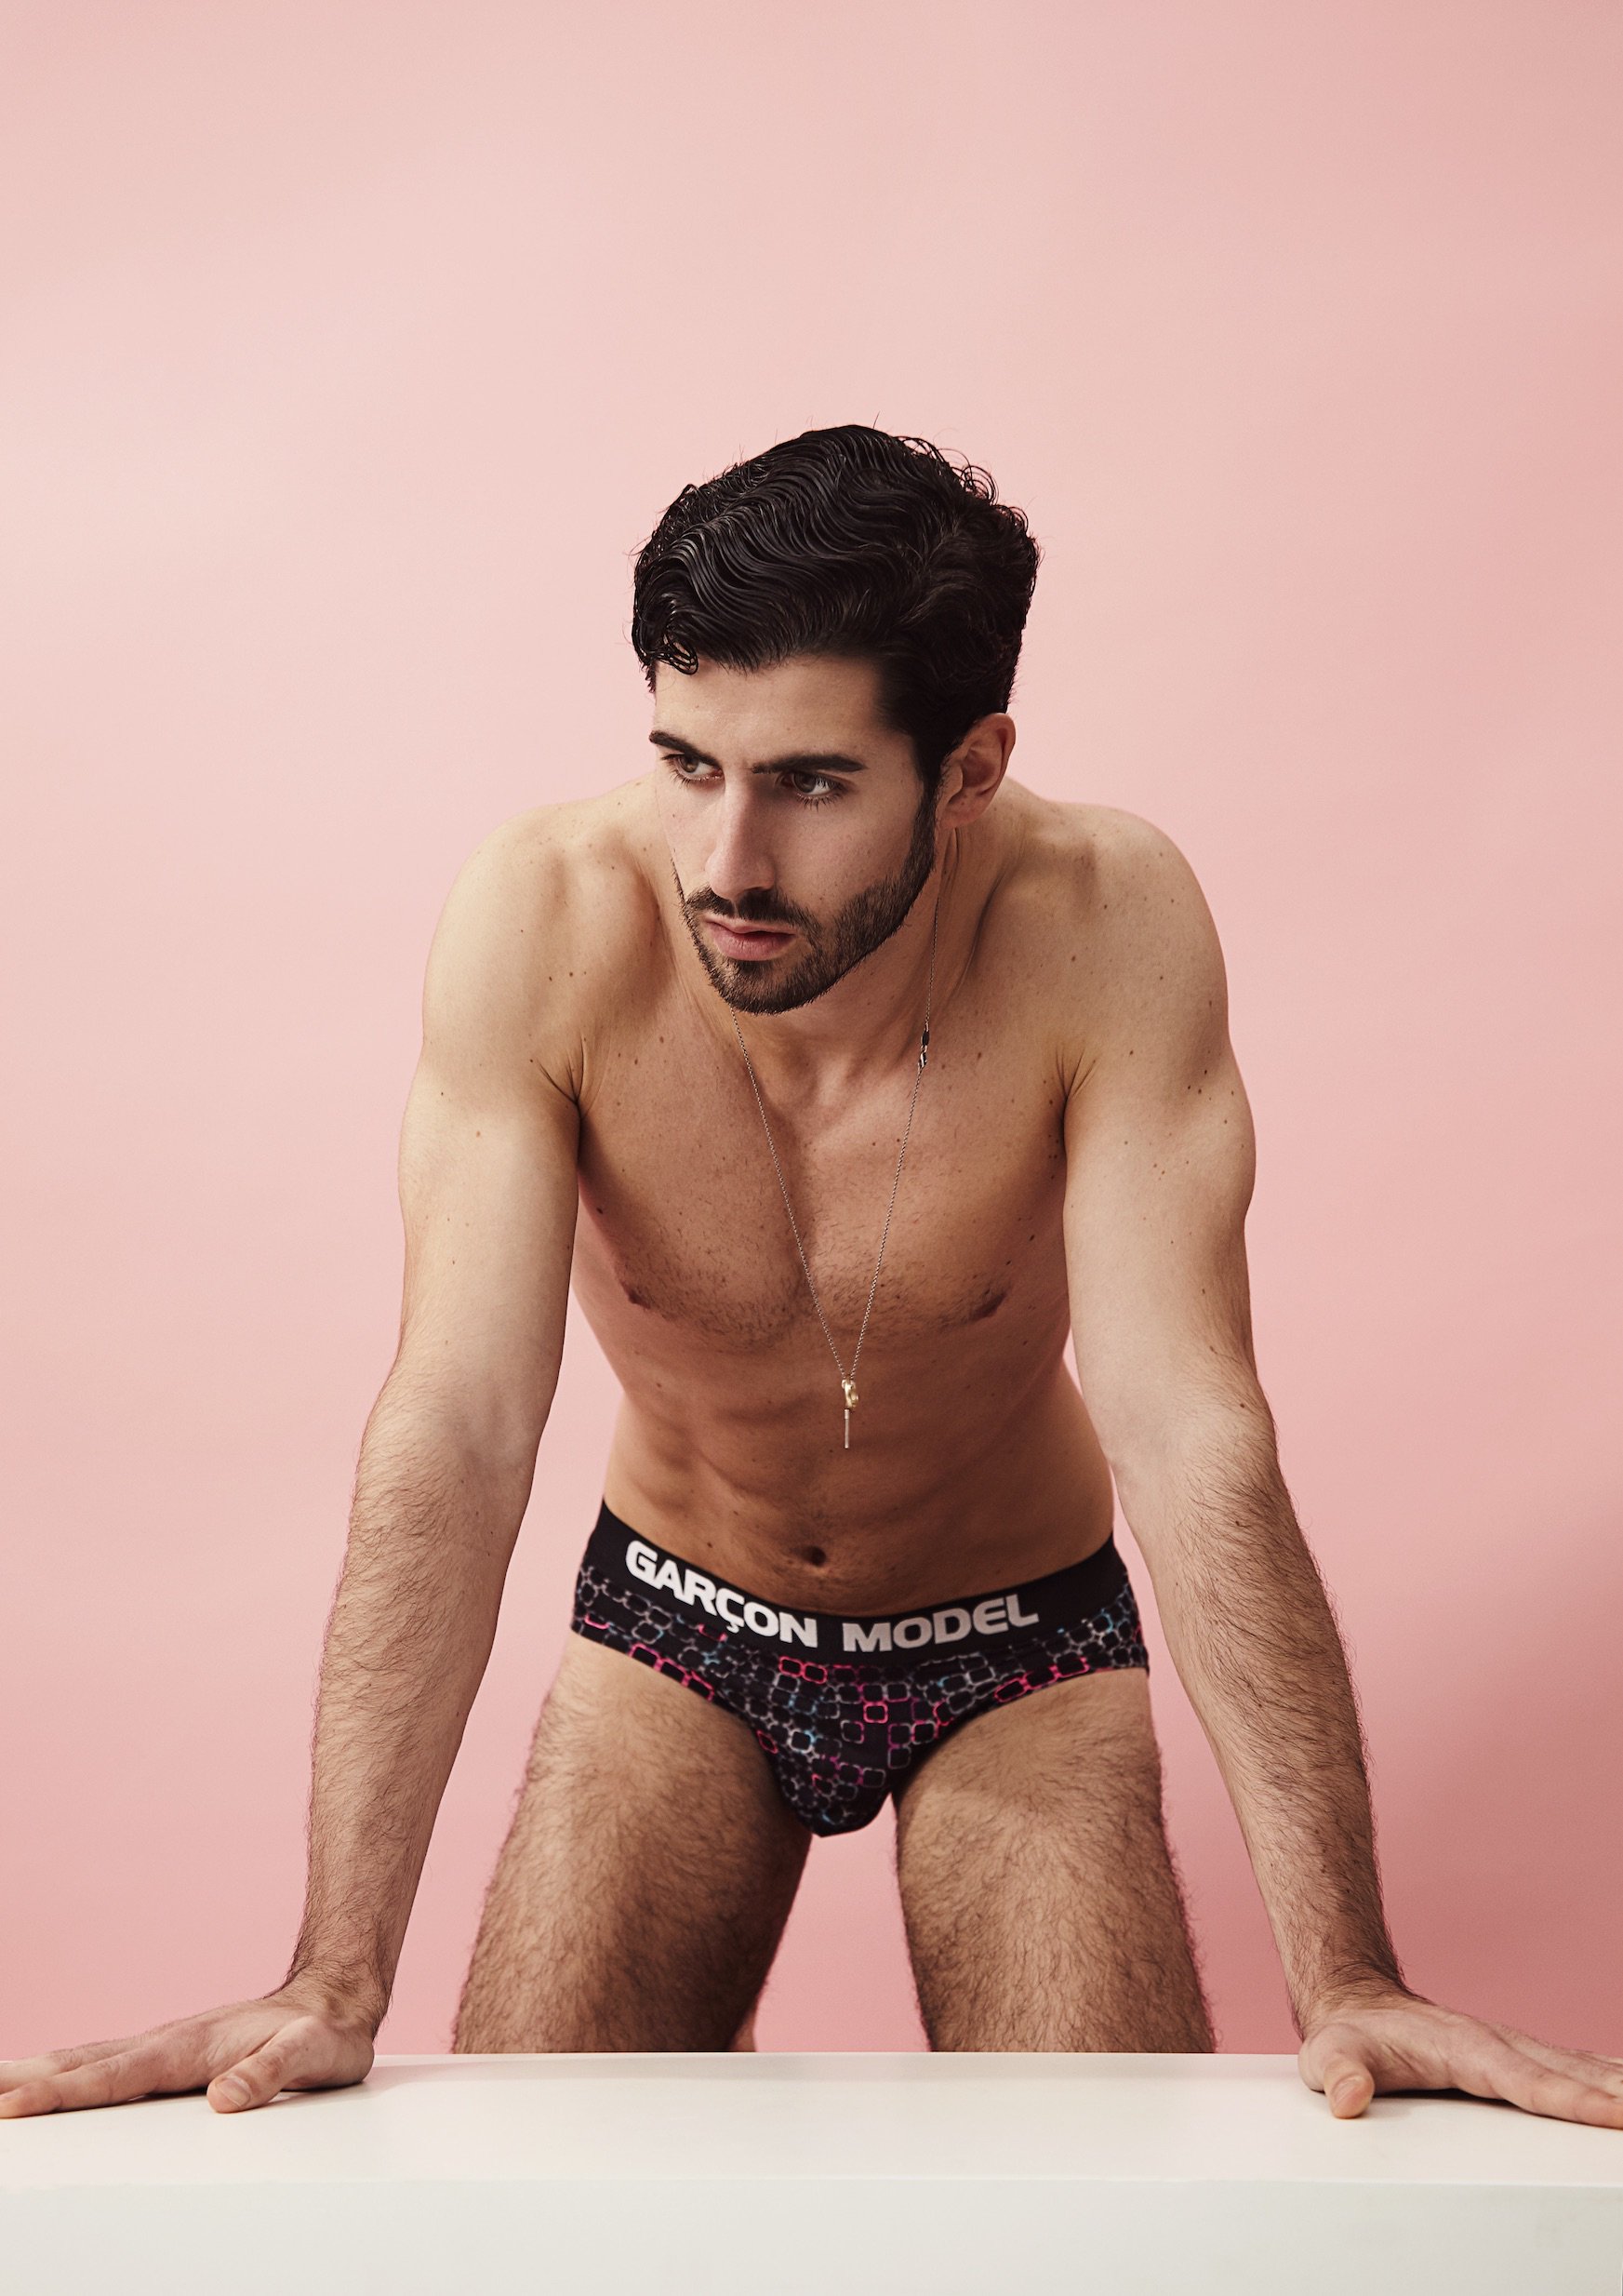 Men and Underwear on X: Italian model @TheNardux collaborated